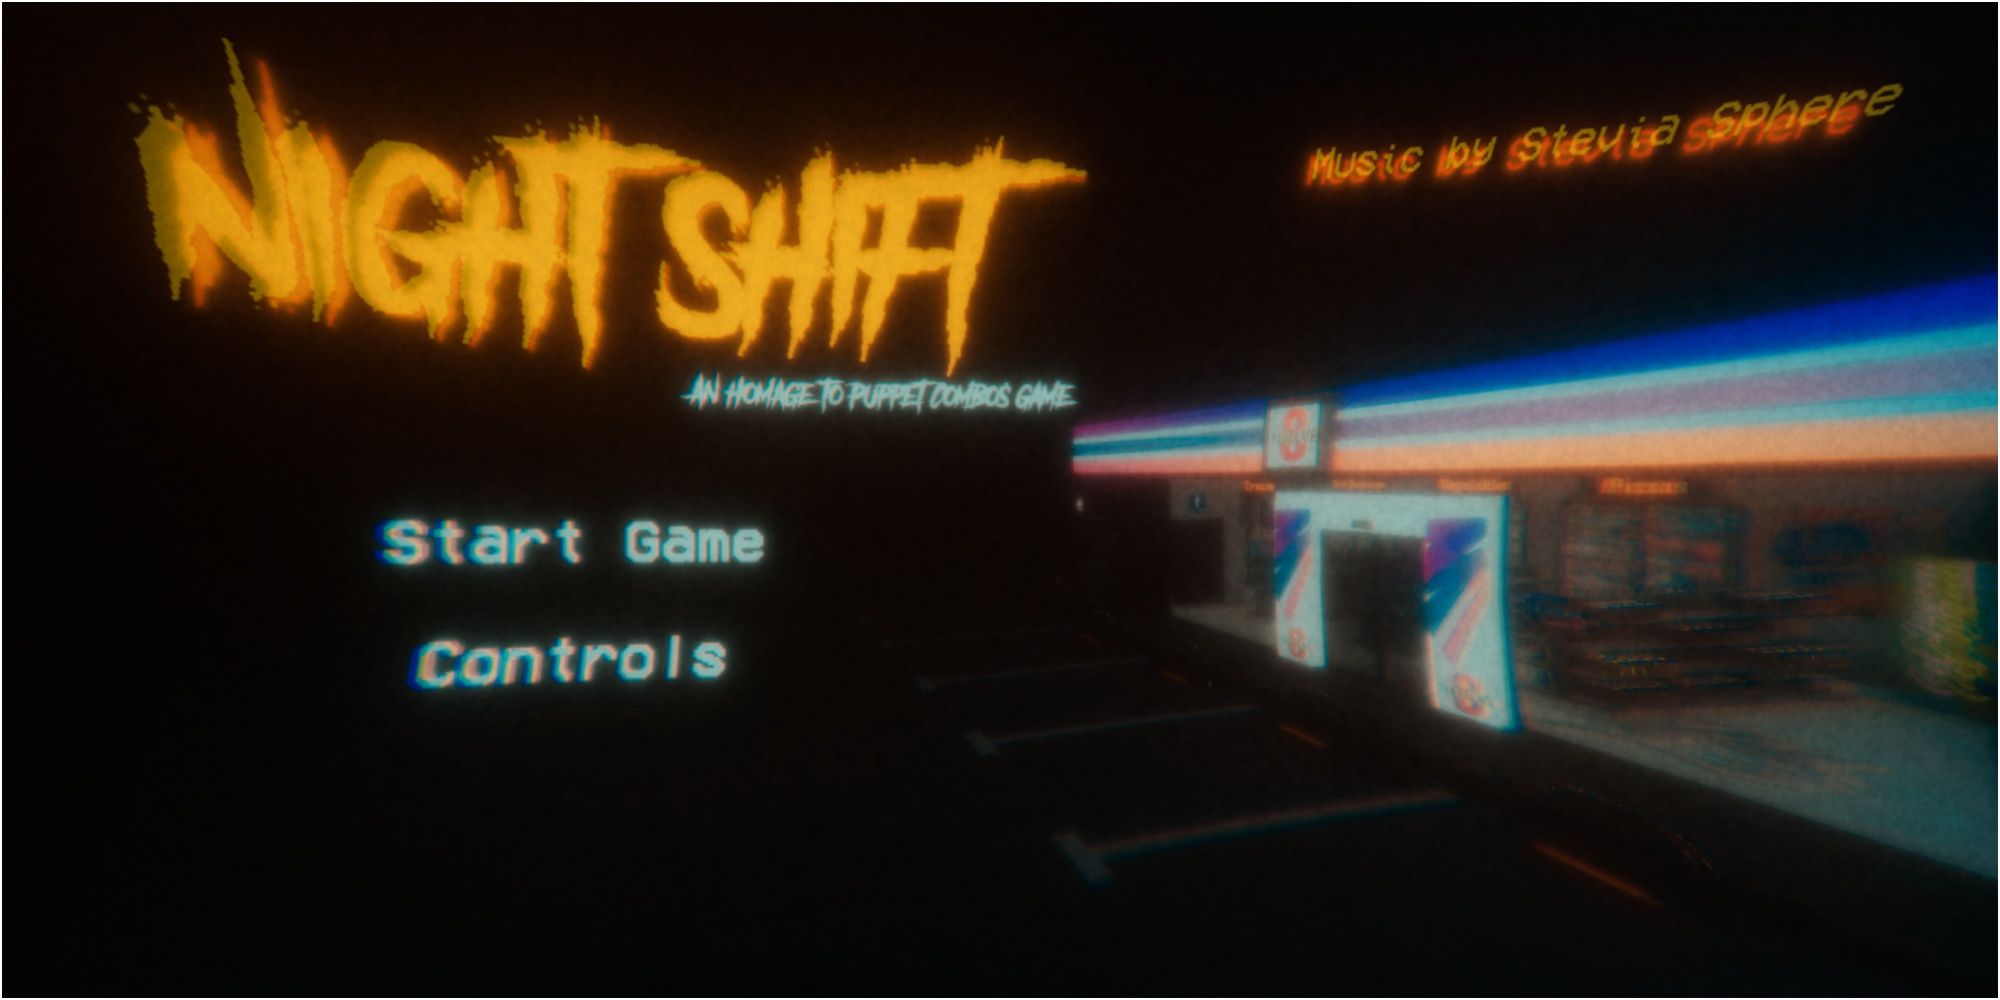 Night Shift title screen